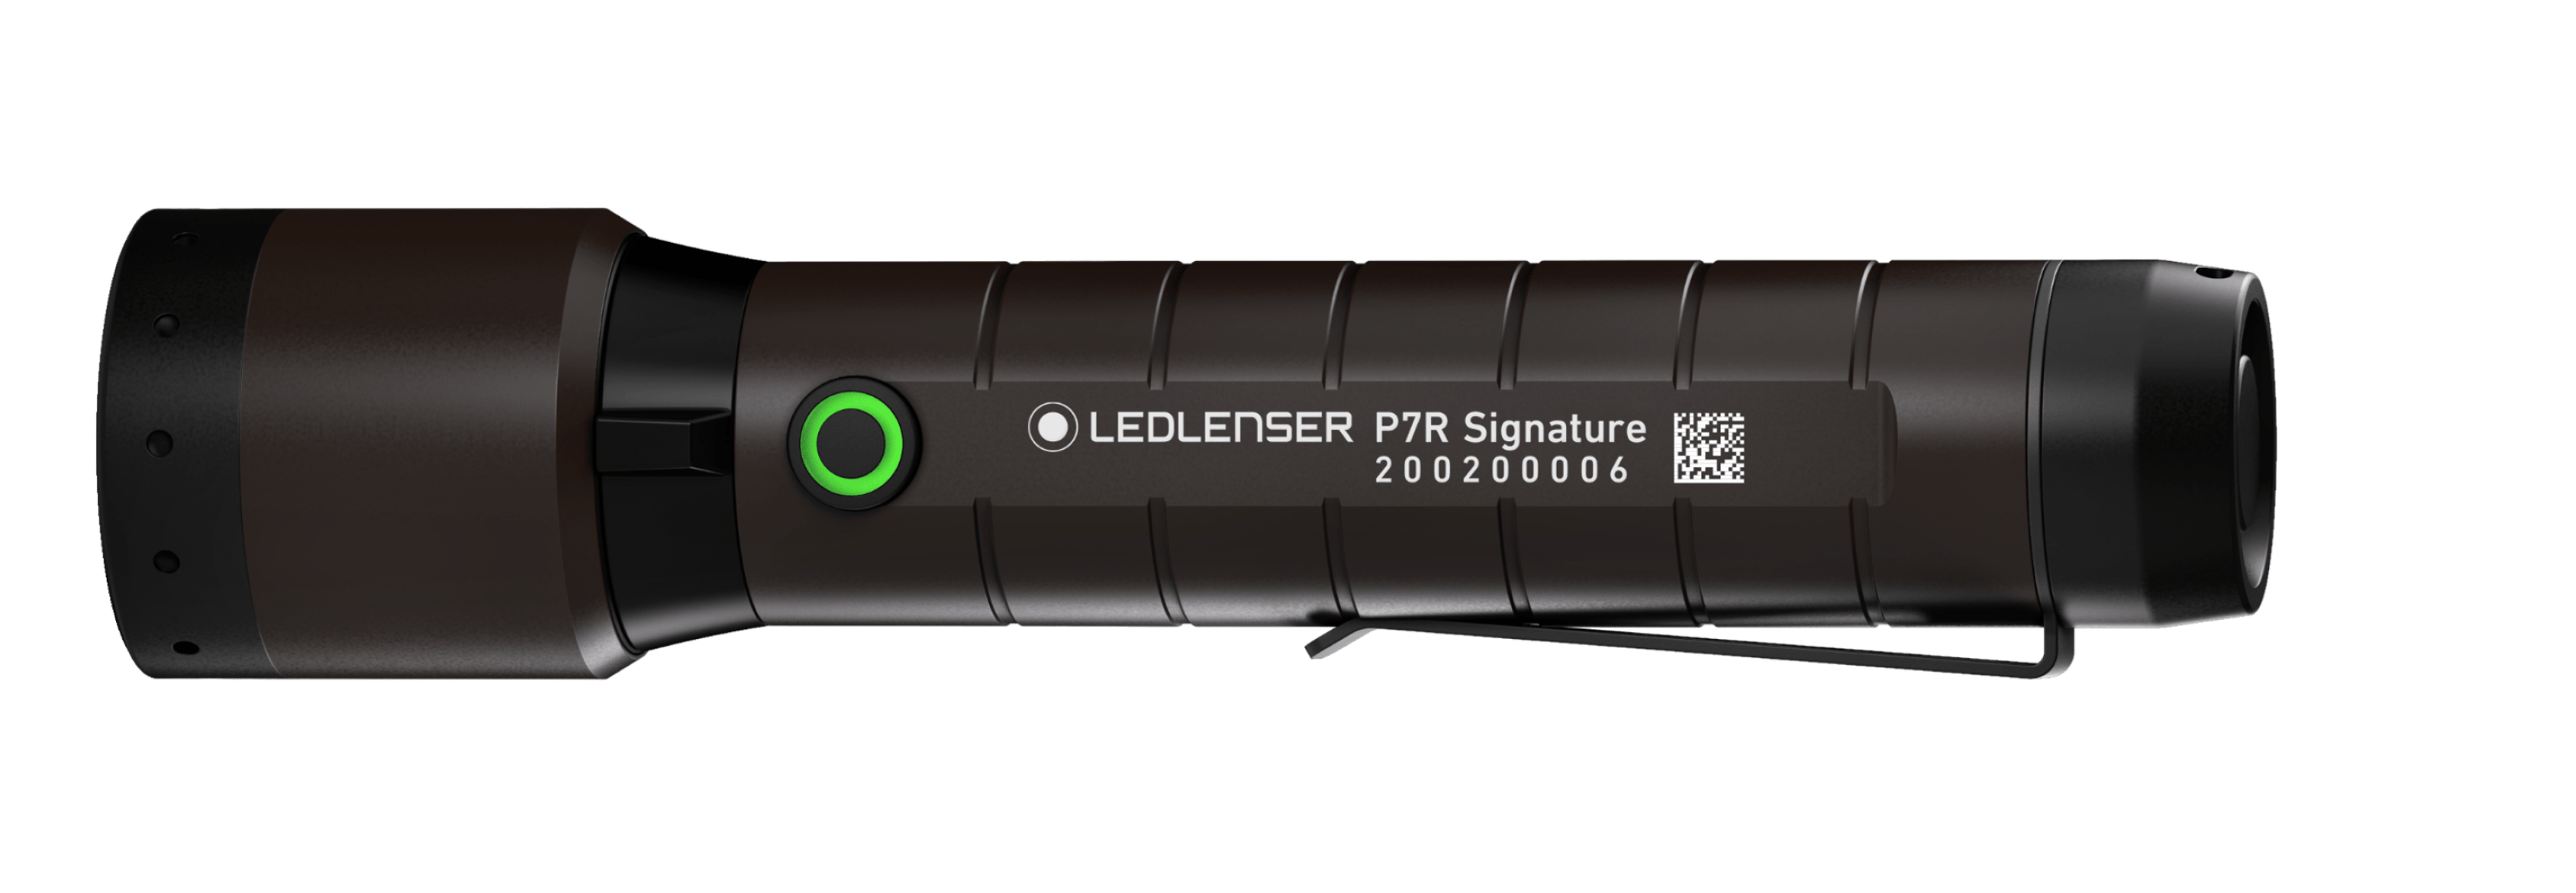 Ledlenser: Flashlights, headlamps and more